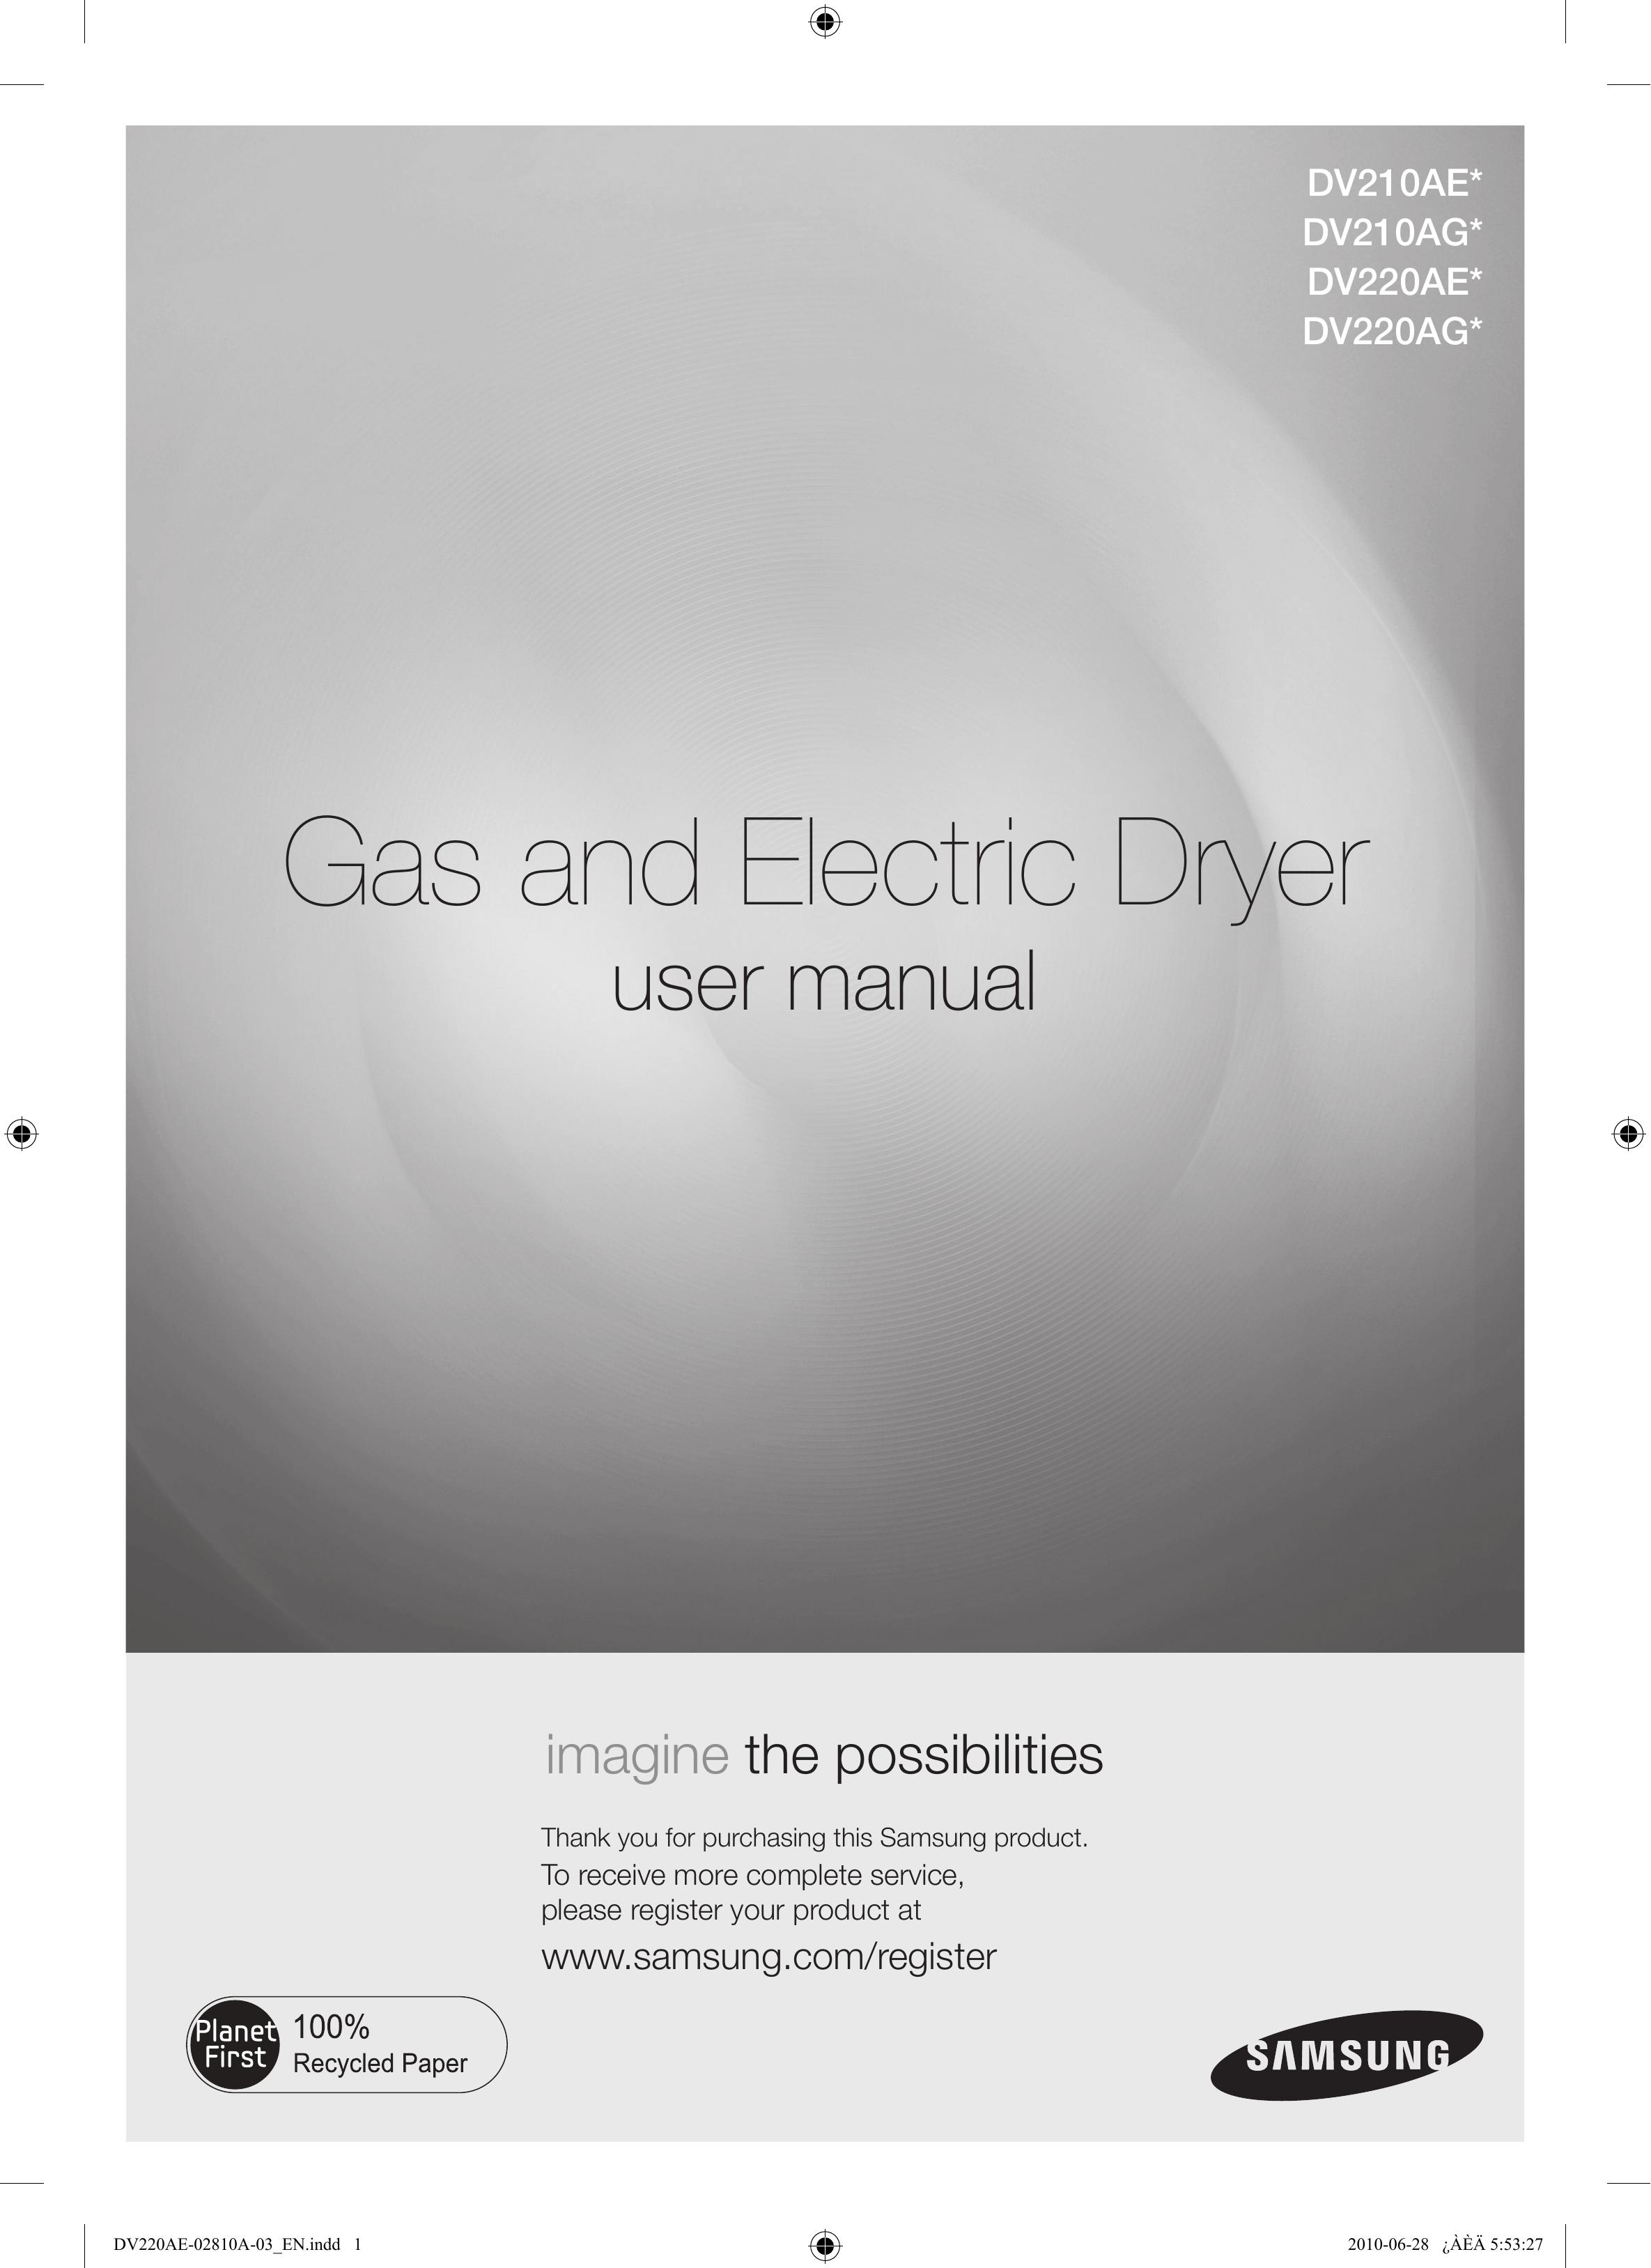 Samsung DV210AG* Clothes Dryer User Manual